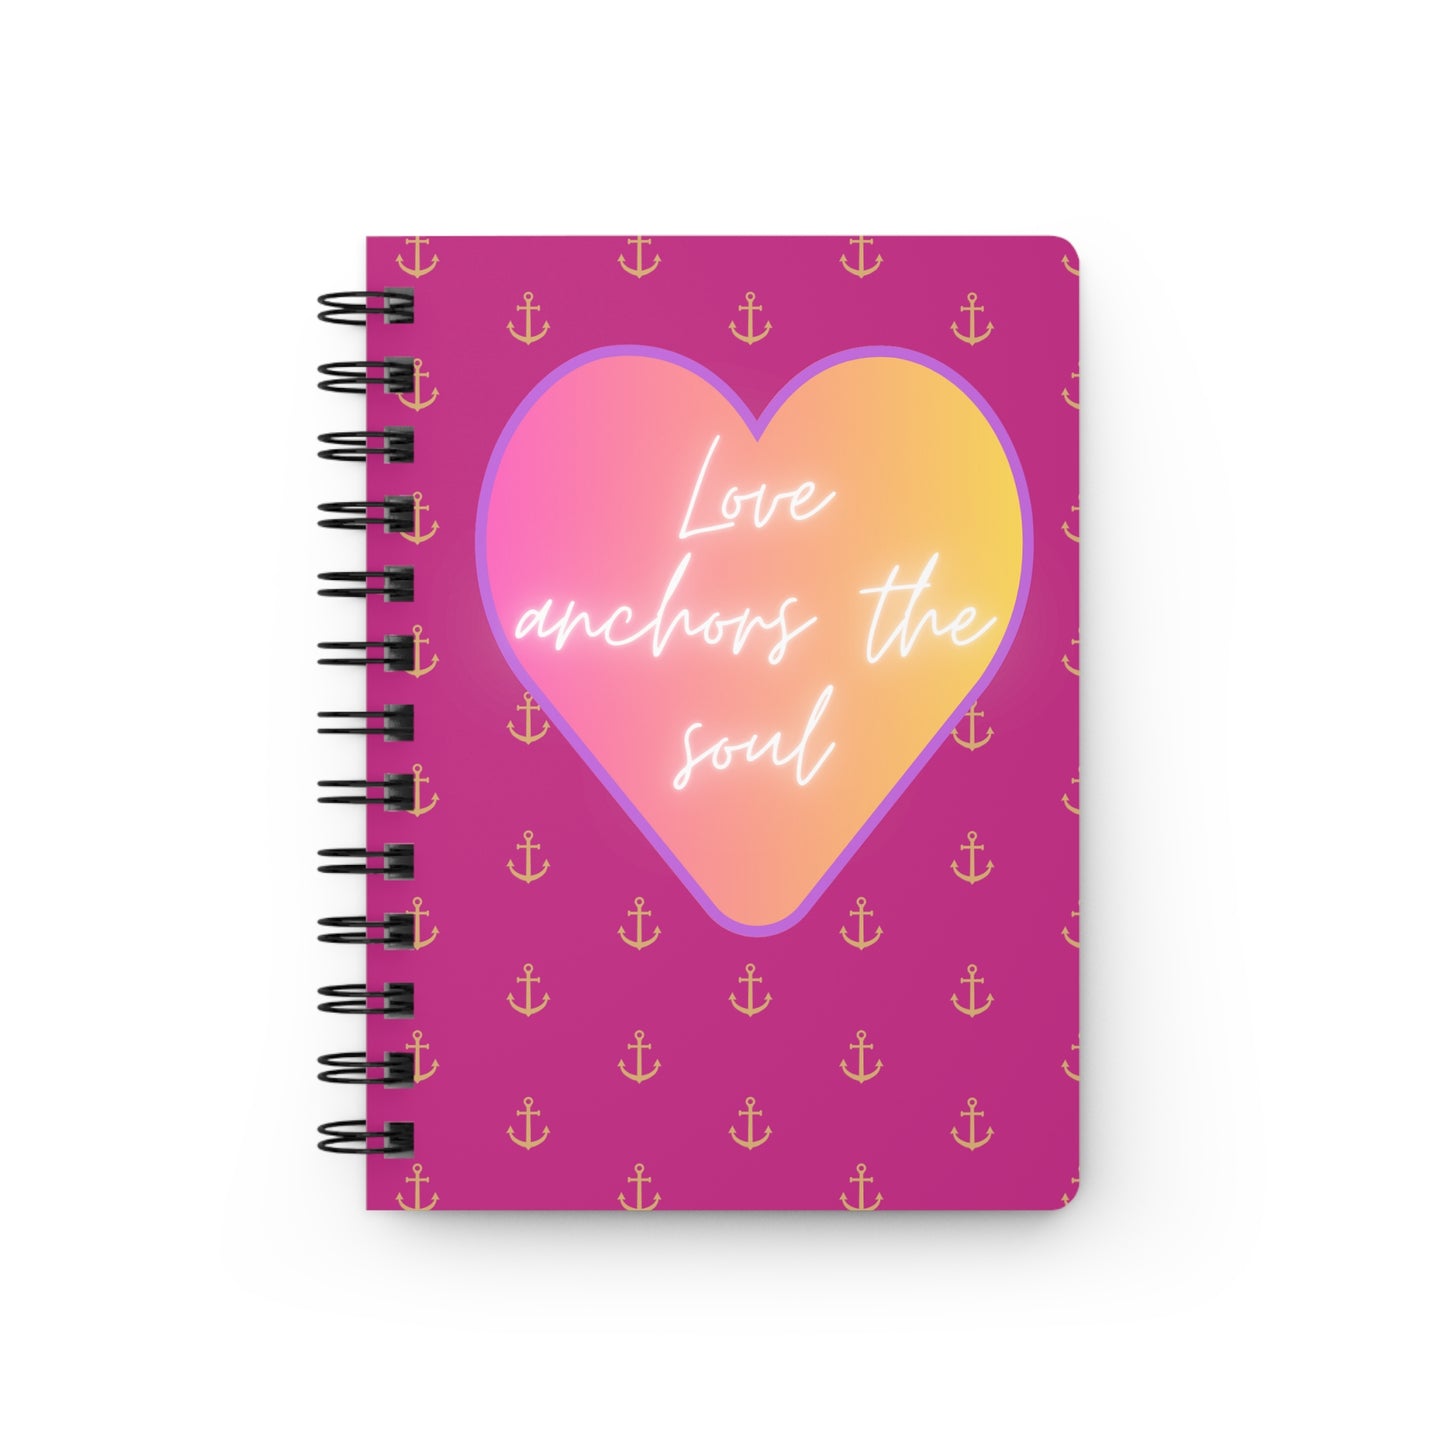 Love anchors the soul - Spiral Bound Journal (Dark pink)